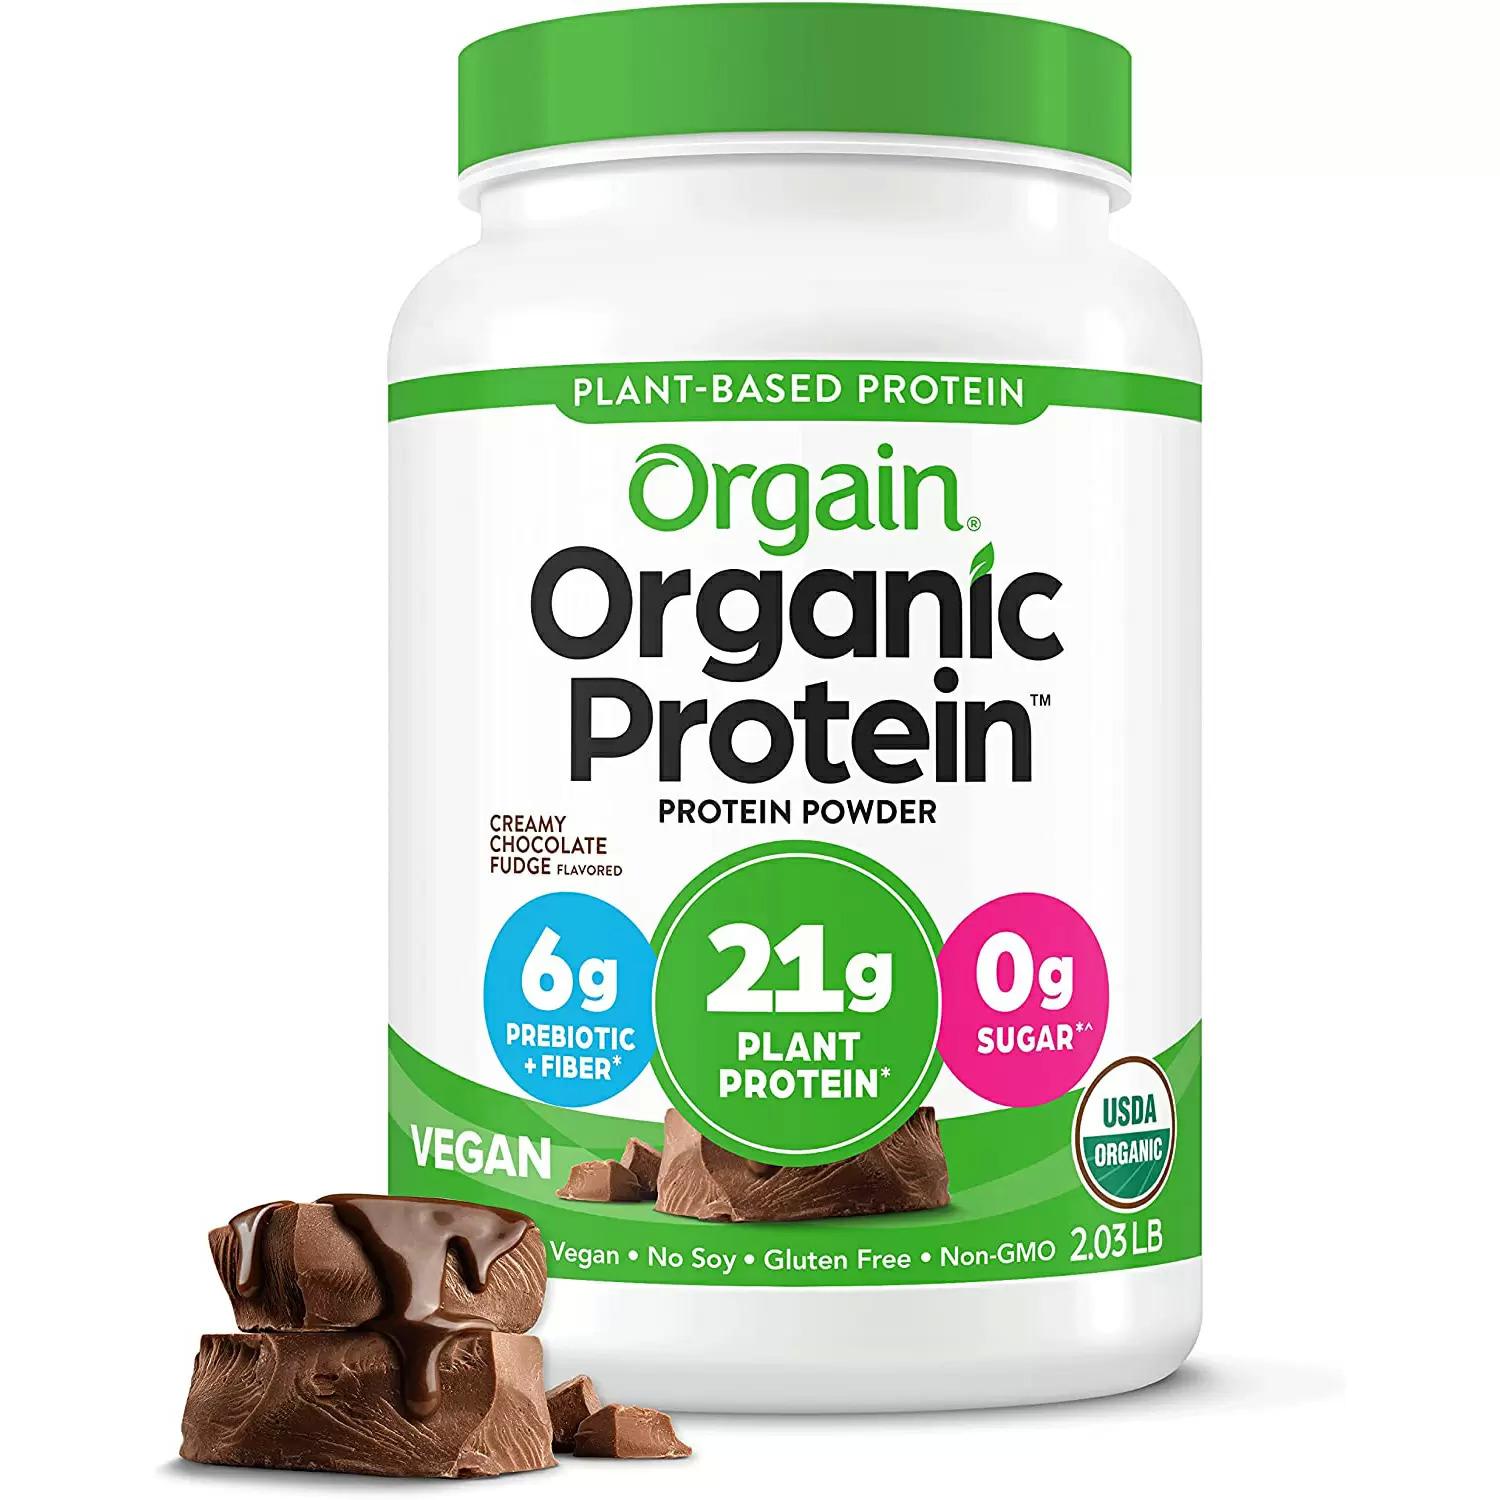 Orgain Organic Plant Based Protein Powder Creamy Chocolate Fudge for $20.24